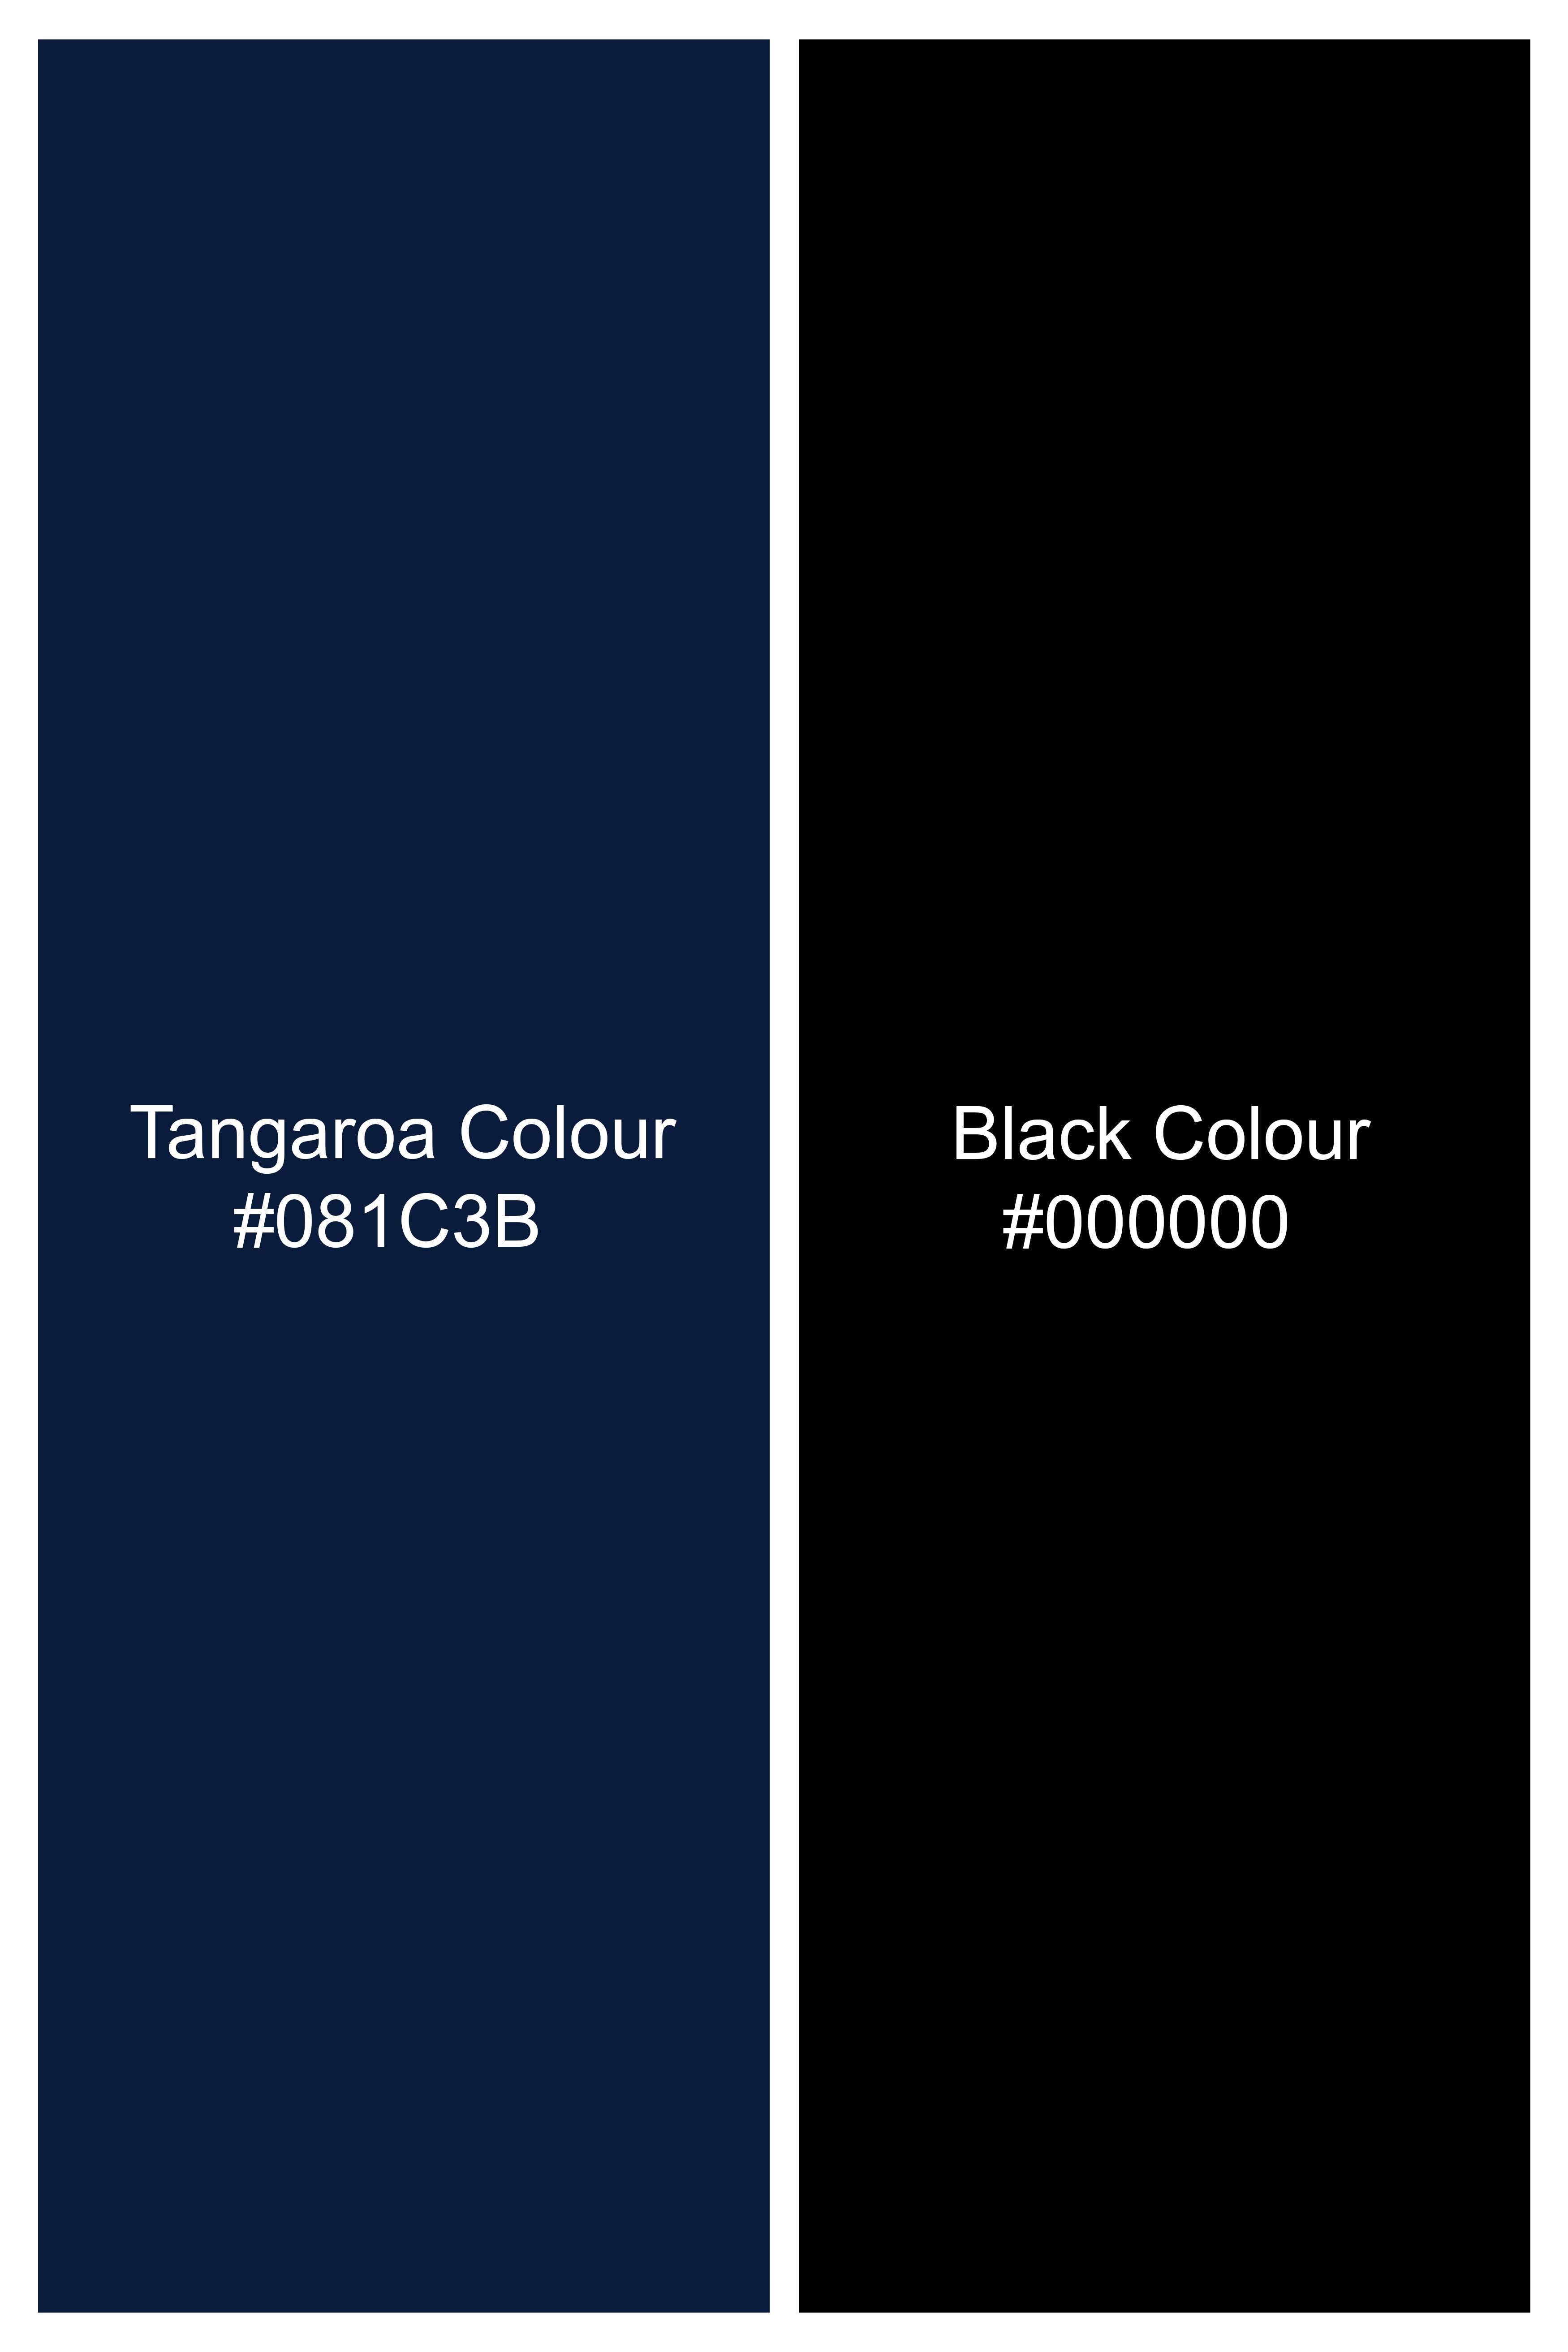 Tangaroa Blue and Subtle Black Checkered Wool Rich Suit ST2871-SB-36, ST2871-SB-38, ST2871-SB-40, ST2871-SB-42, ST2871-SB-44, ST2871-SB-46, ST2871-SB-48, ST2871-SB-50, ST2871-SB-52, ST2871-SB-54, ST2871-SB-56, ST2871-SB-58, ST2871-SB-60